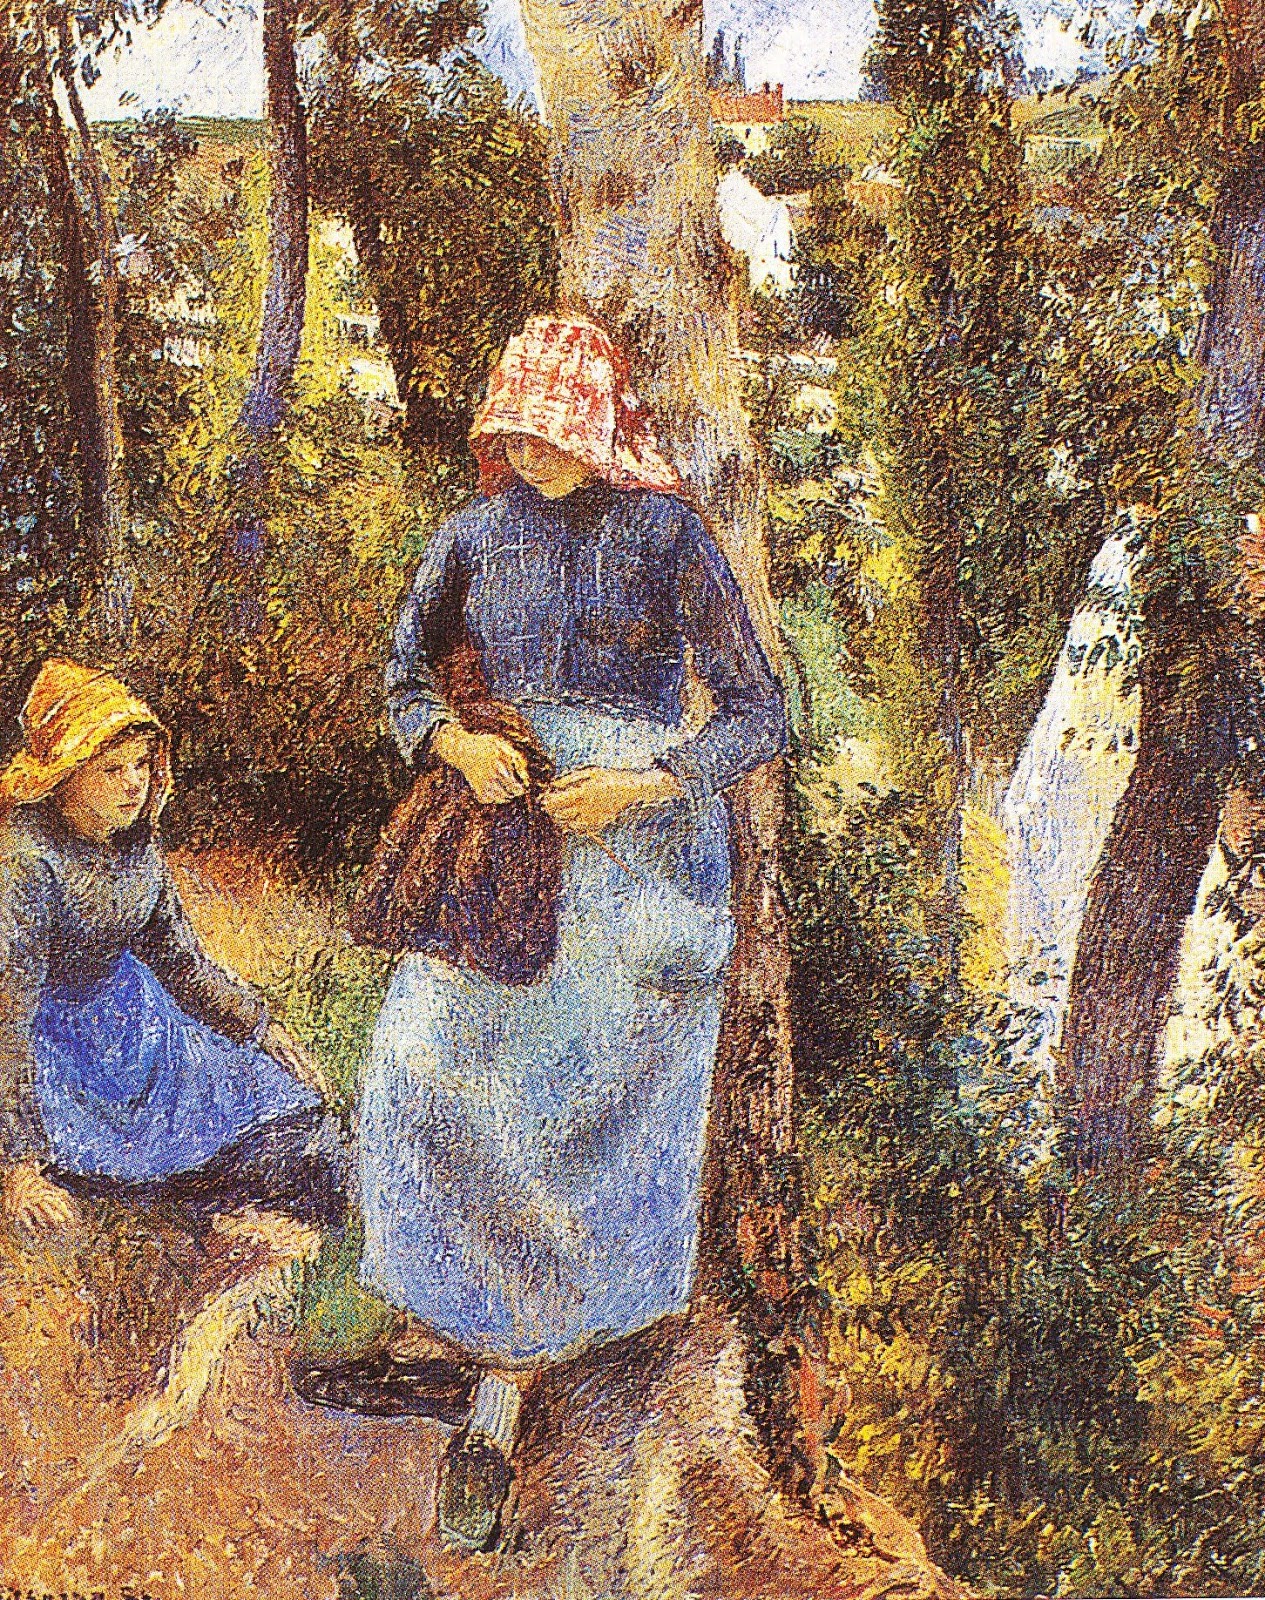 Camille+Pissarro-1830-1903 (199).jpg